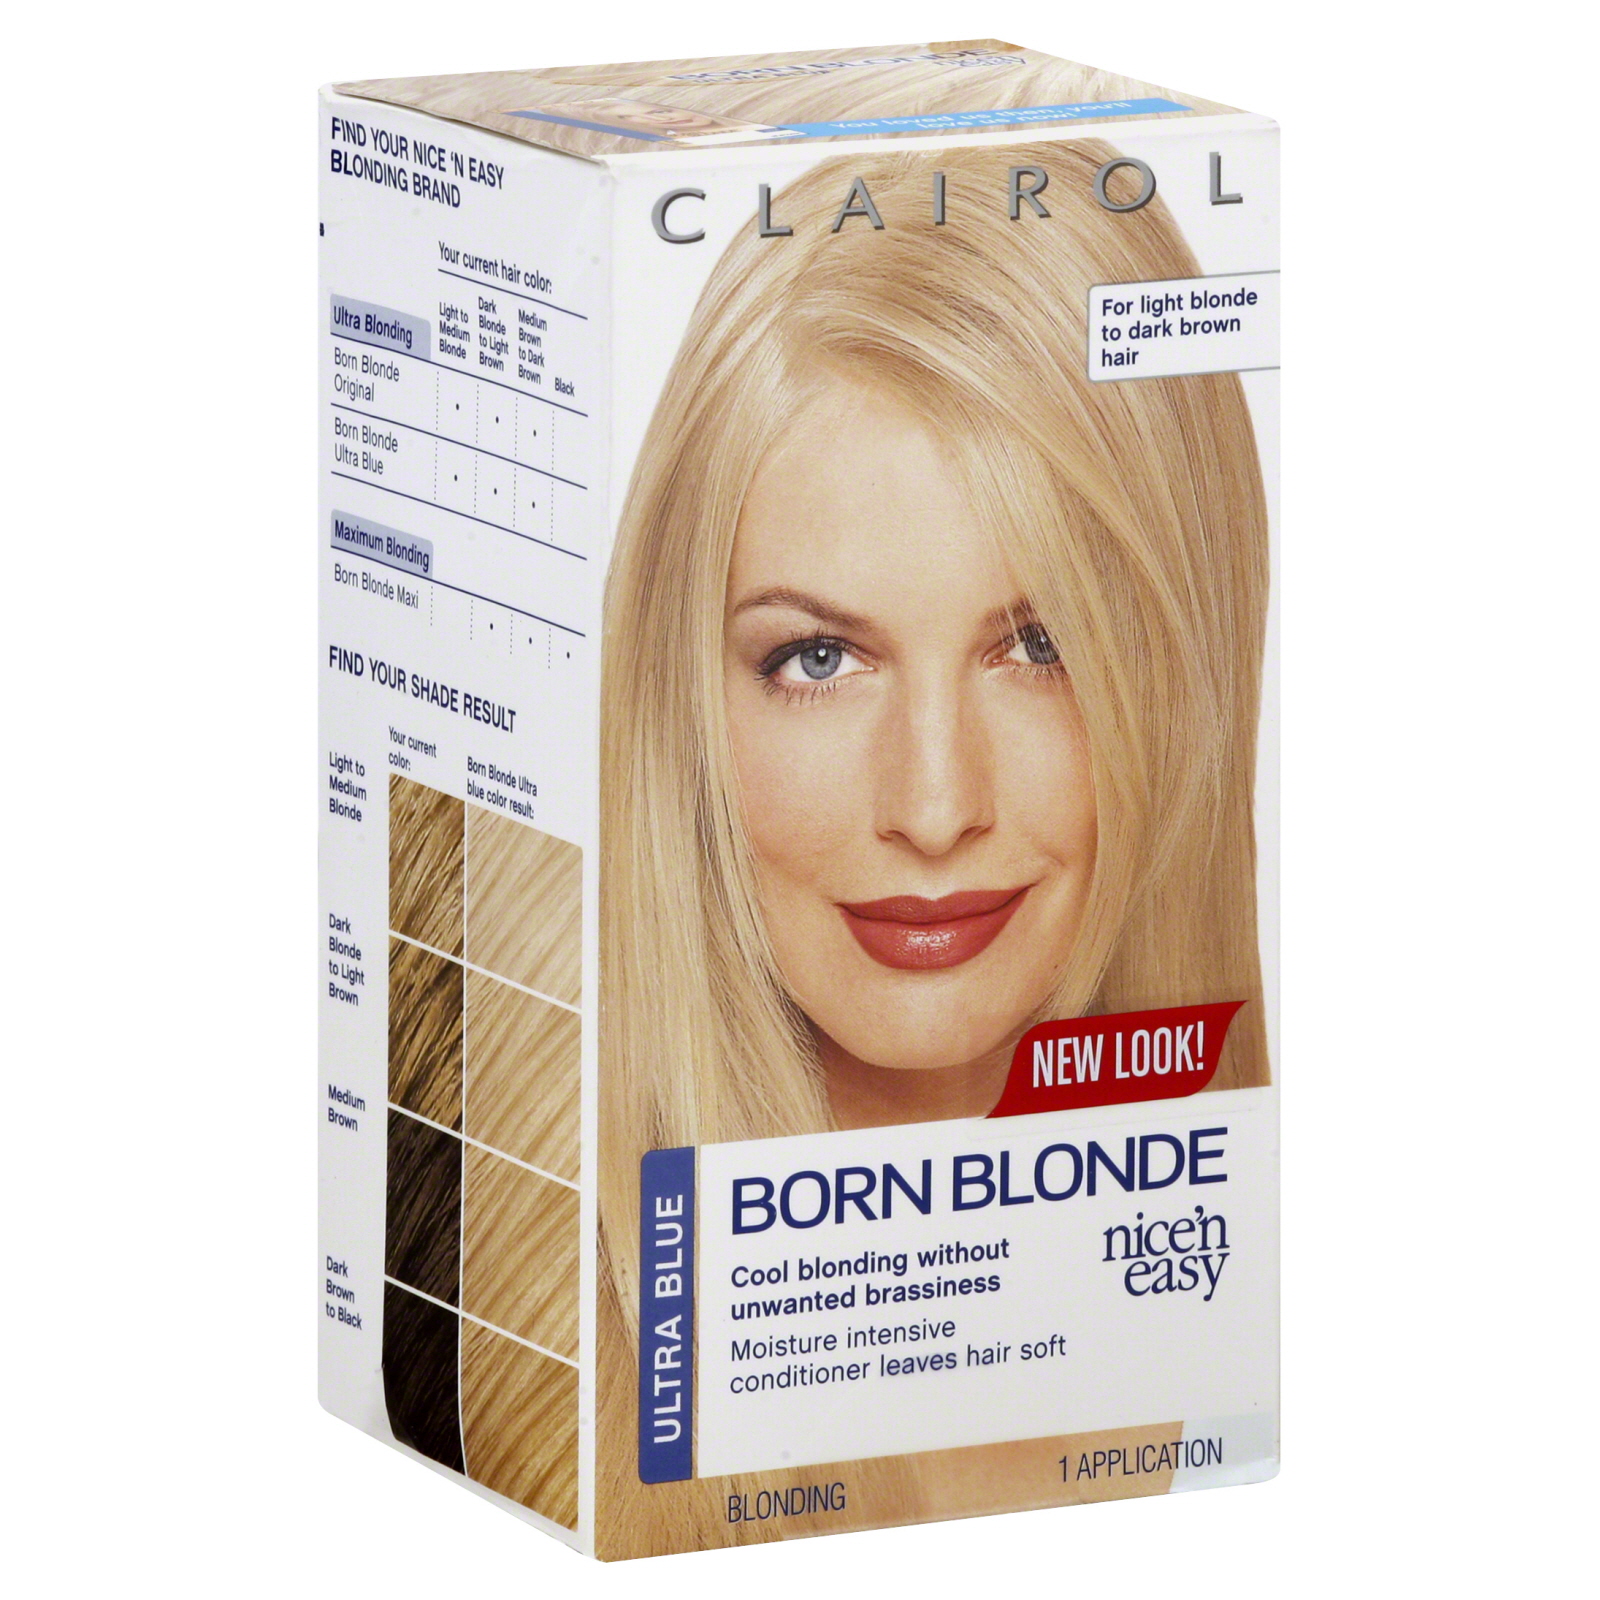 Clairol Nice 'n Easy Born Blonde Blonding, for Light Blonde to Dark Brown Hair, Ultra Blue, 1 application